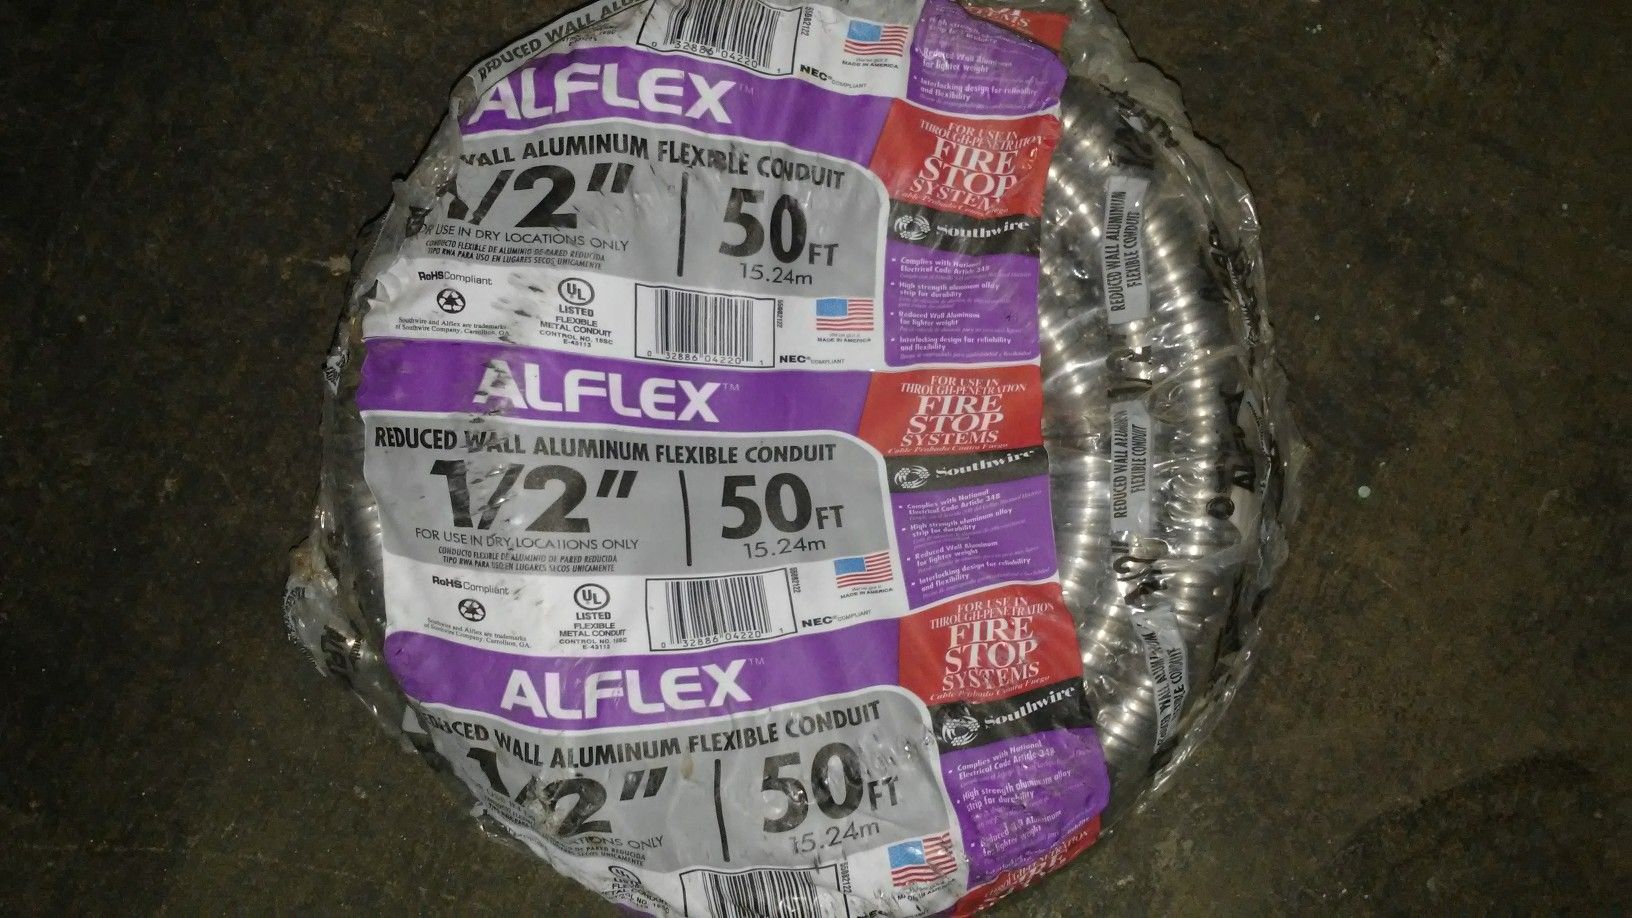 Alflex Reduced Wall Aluminum Flexible Conduit